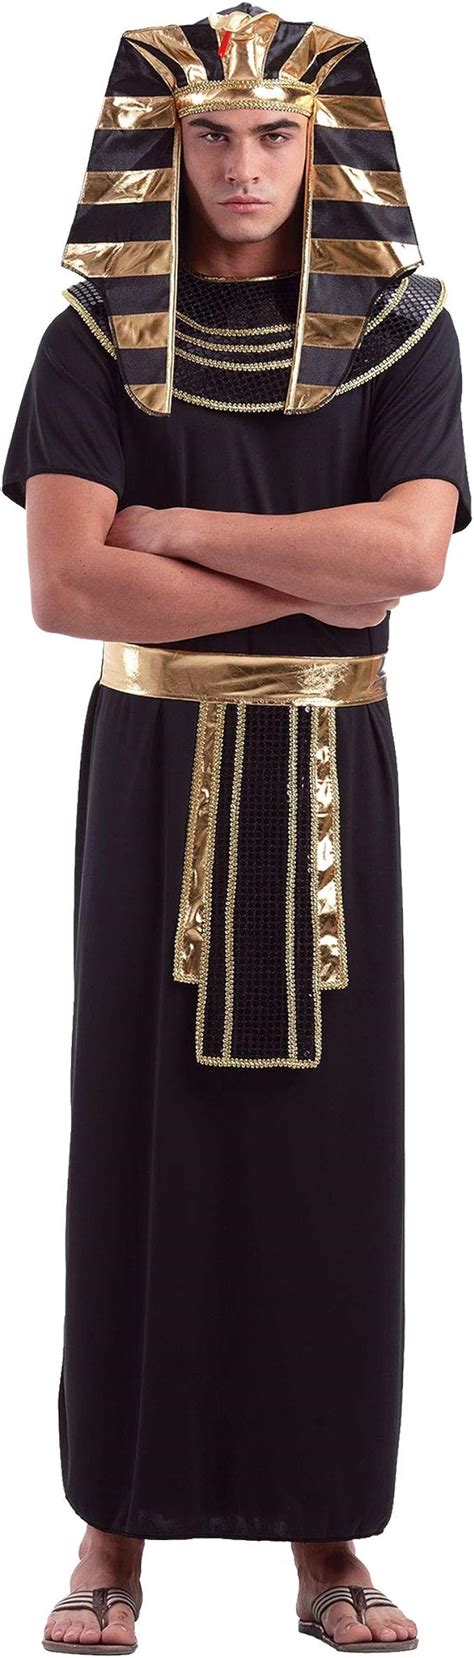 Amazon Com Egyptian Pharaoh Mens Halloween Costume King Of Egypt Ancient Robes Clothing